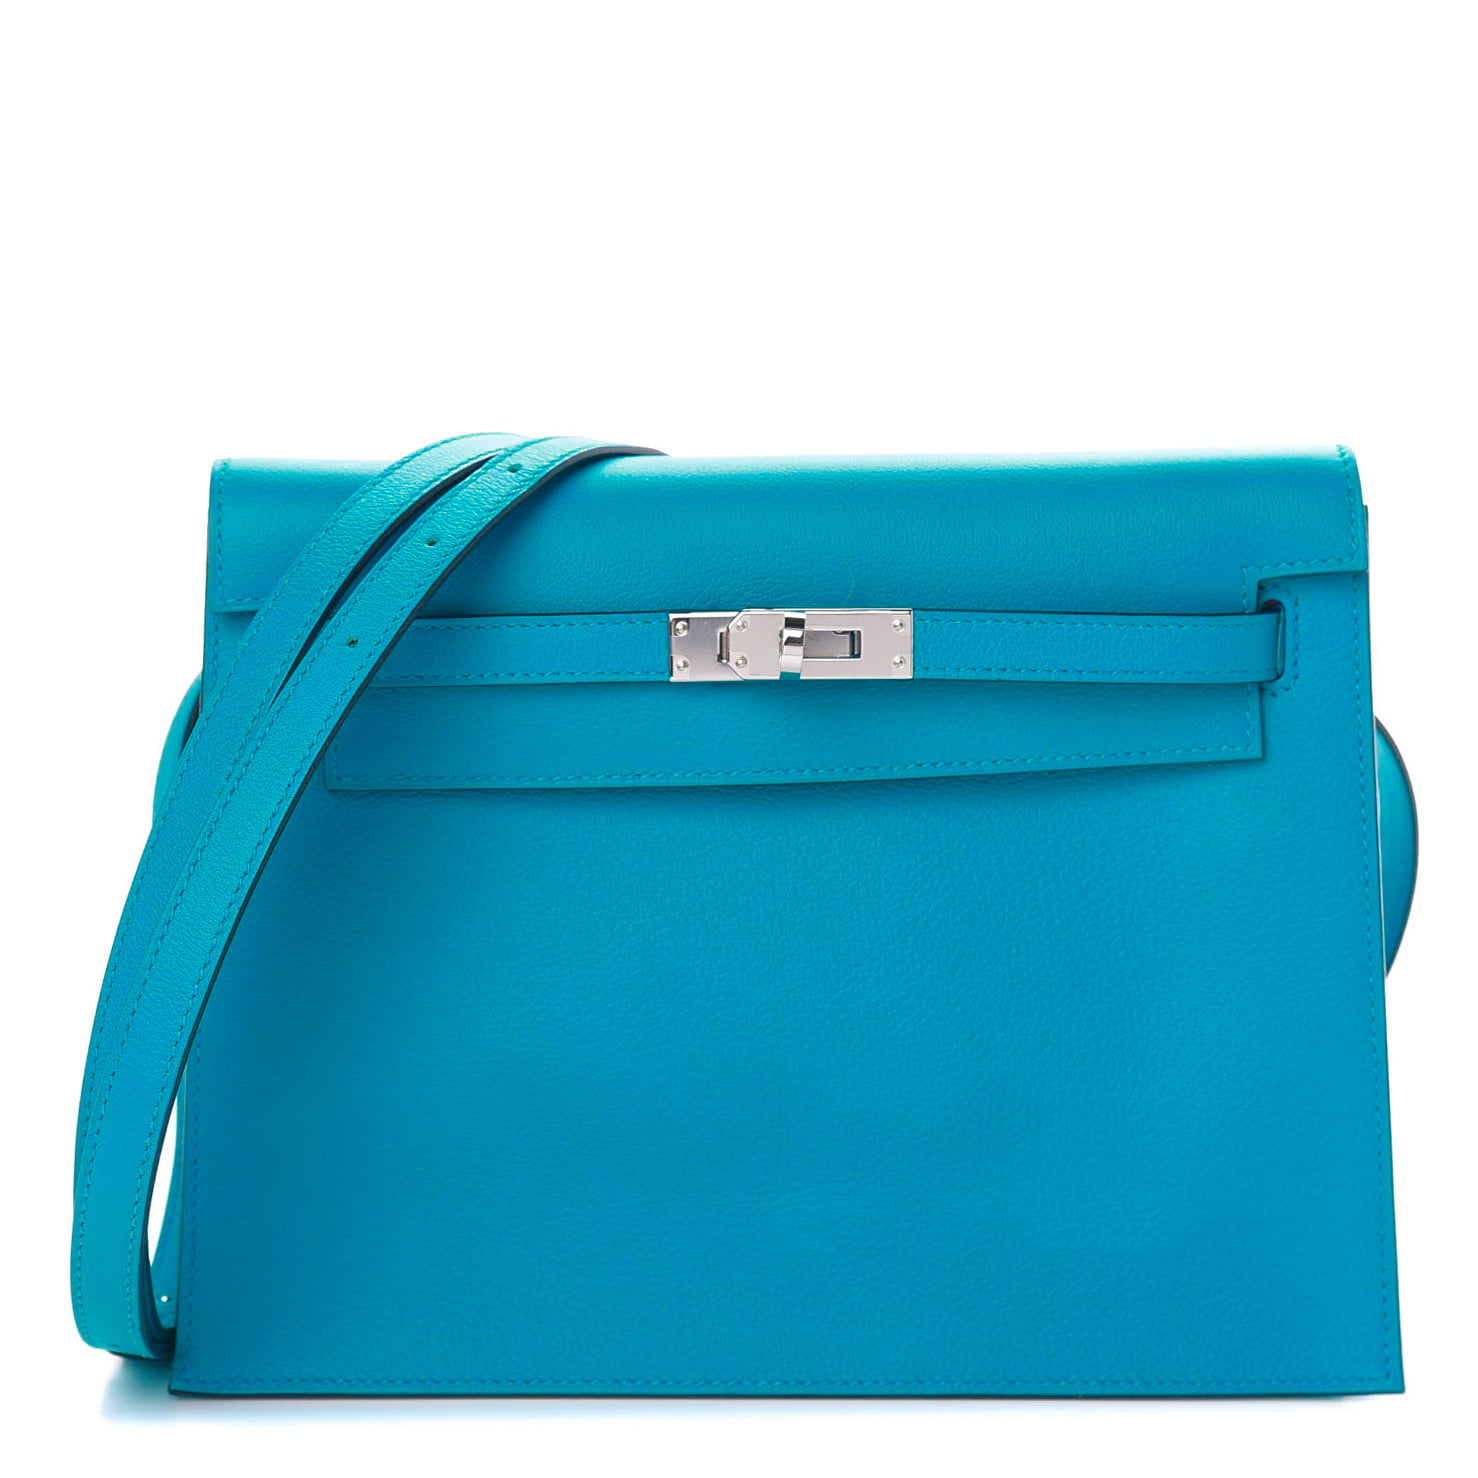 Authentic Hermès Aline mini bag - AT LUX Consignment Store